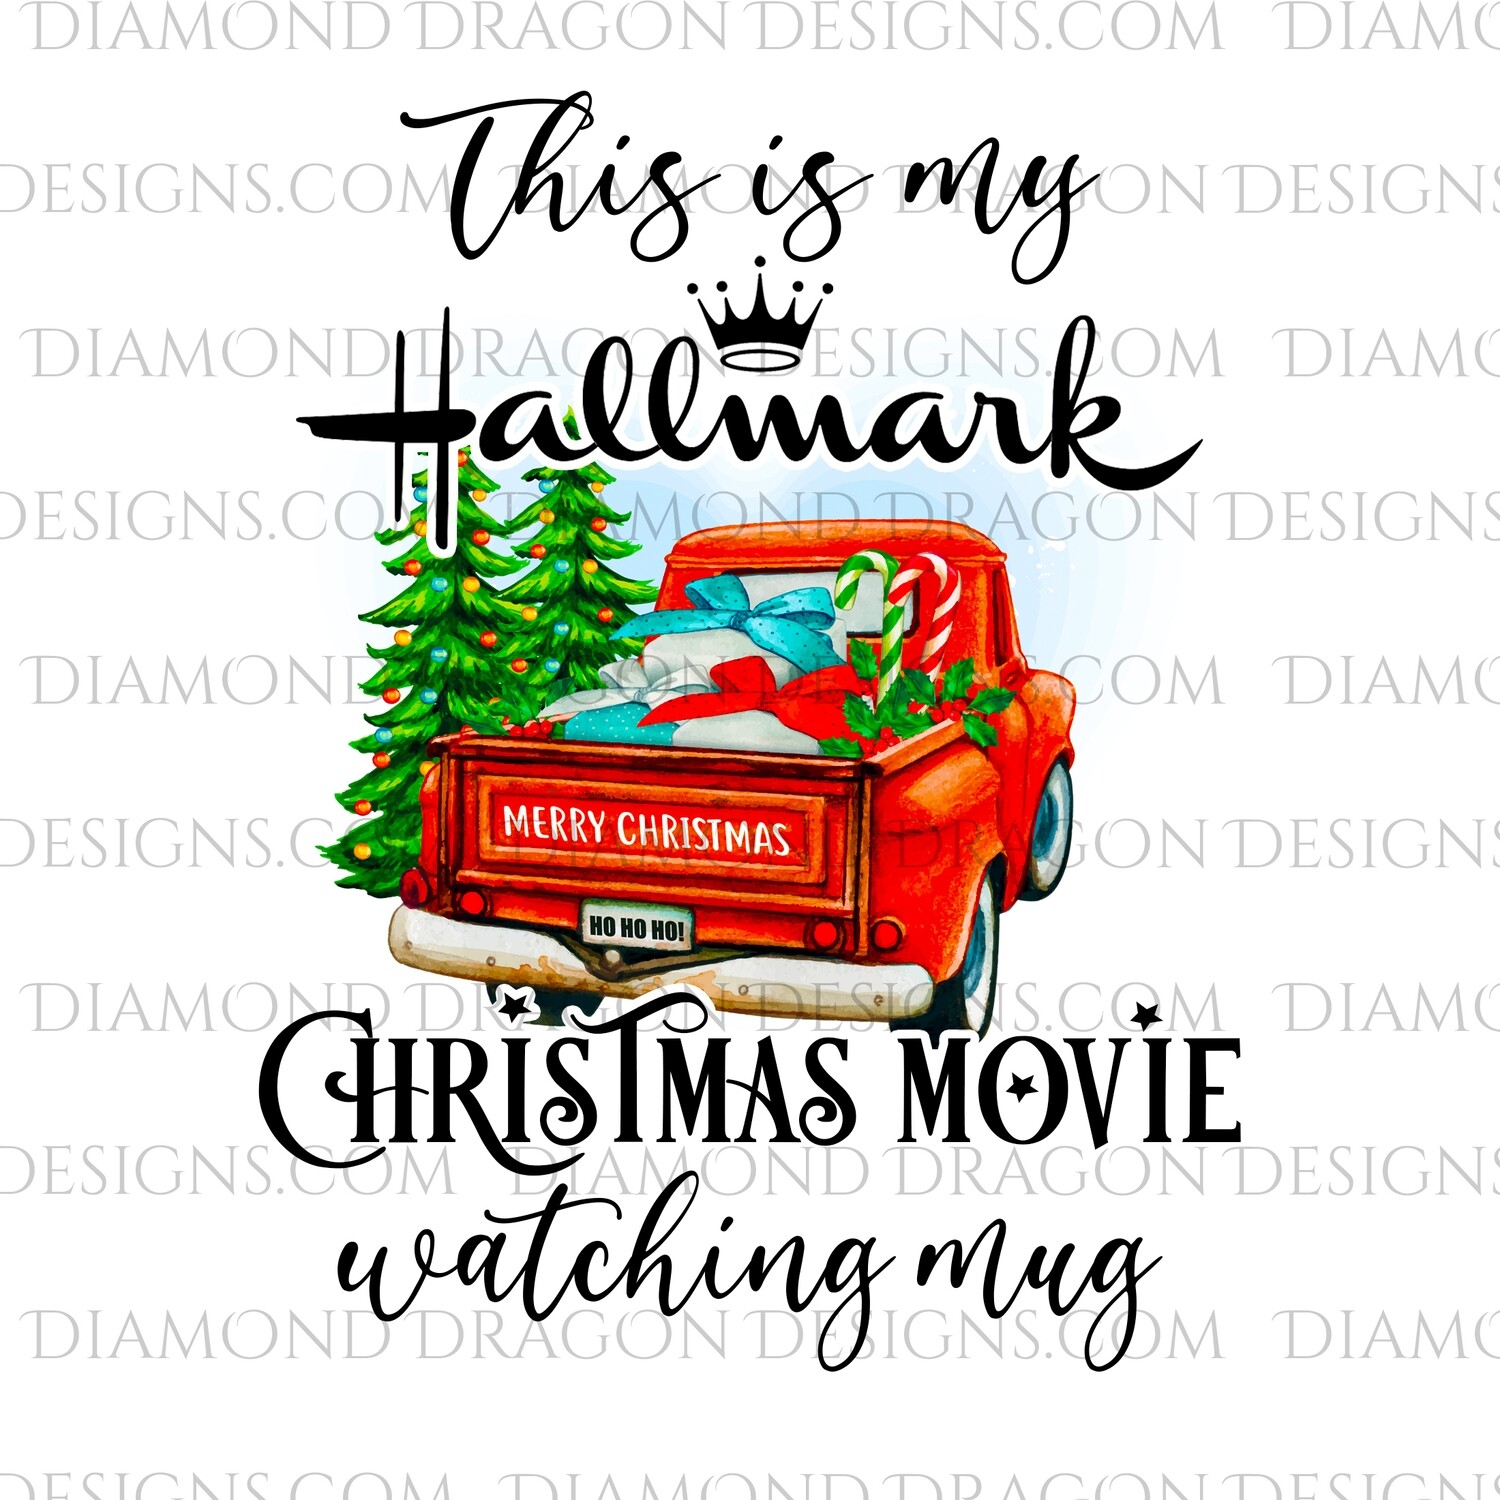 Christmas - Red Truck, Christmas Tree, Hallmark Christmas Movie Watching Mug, Red Vintage Truck, Digital Image